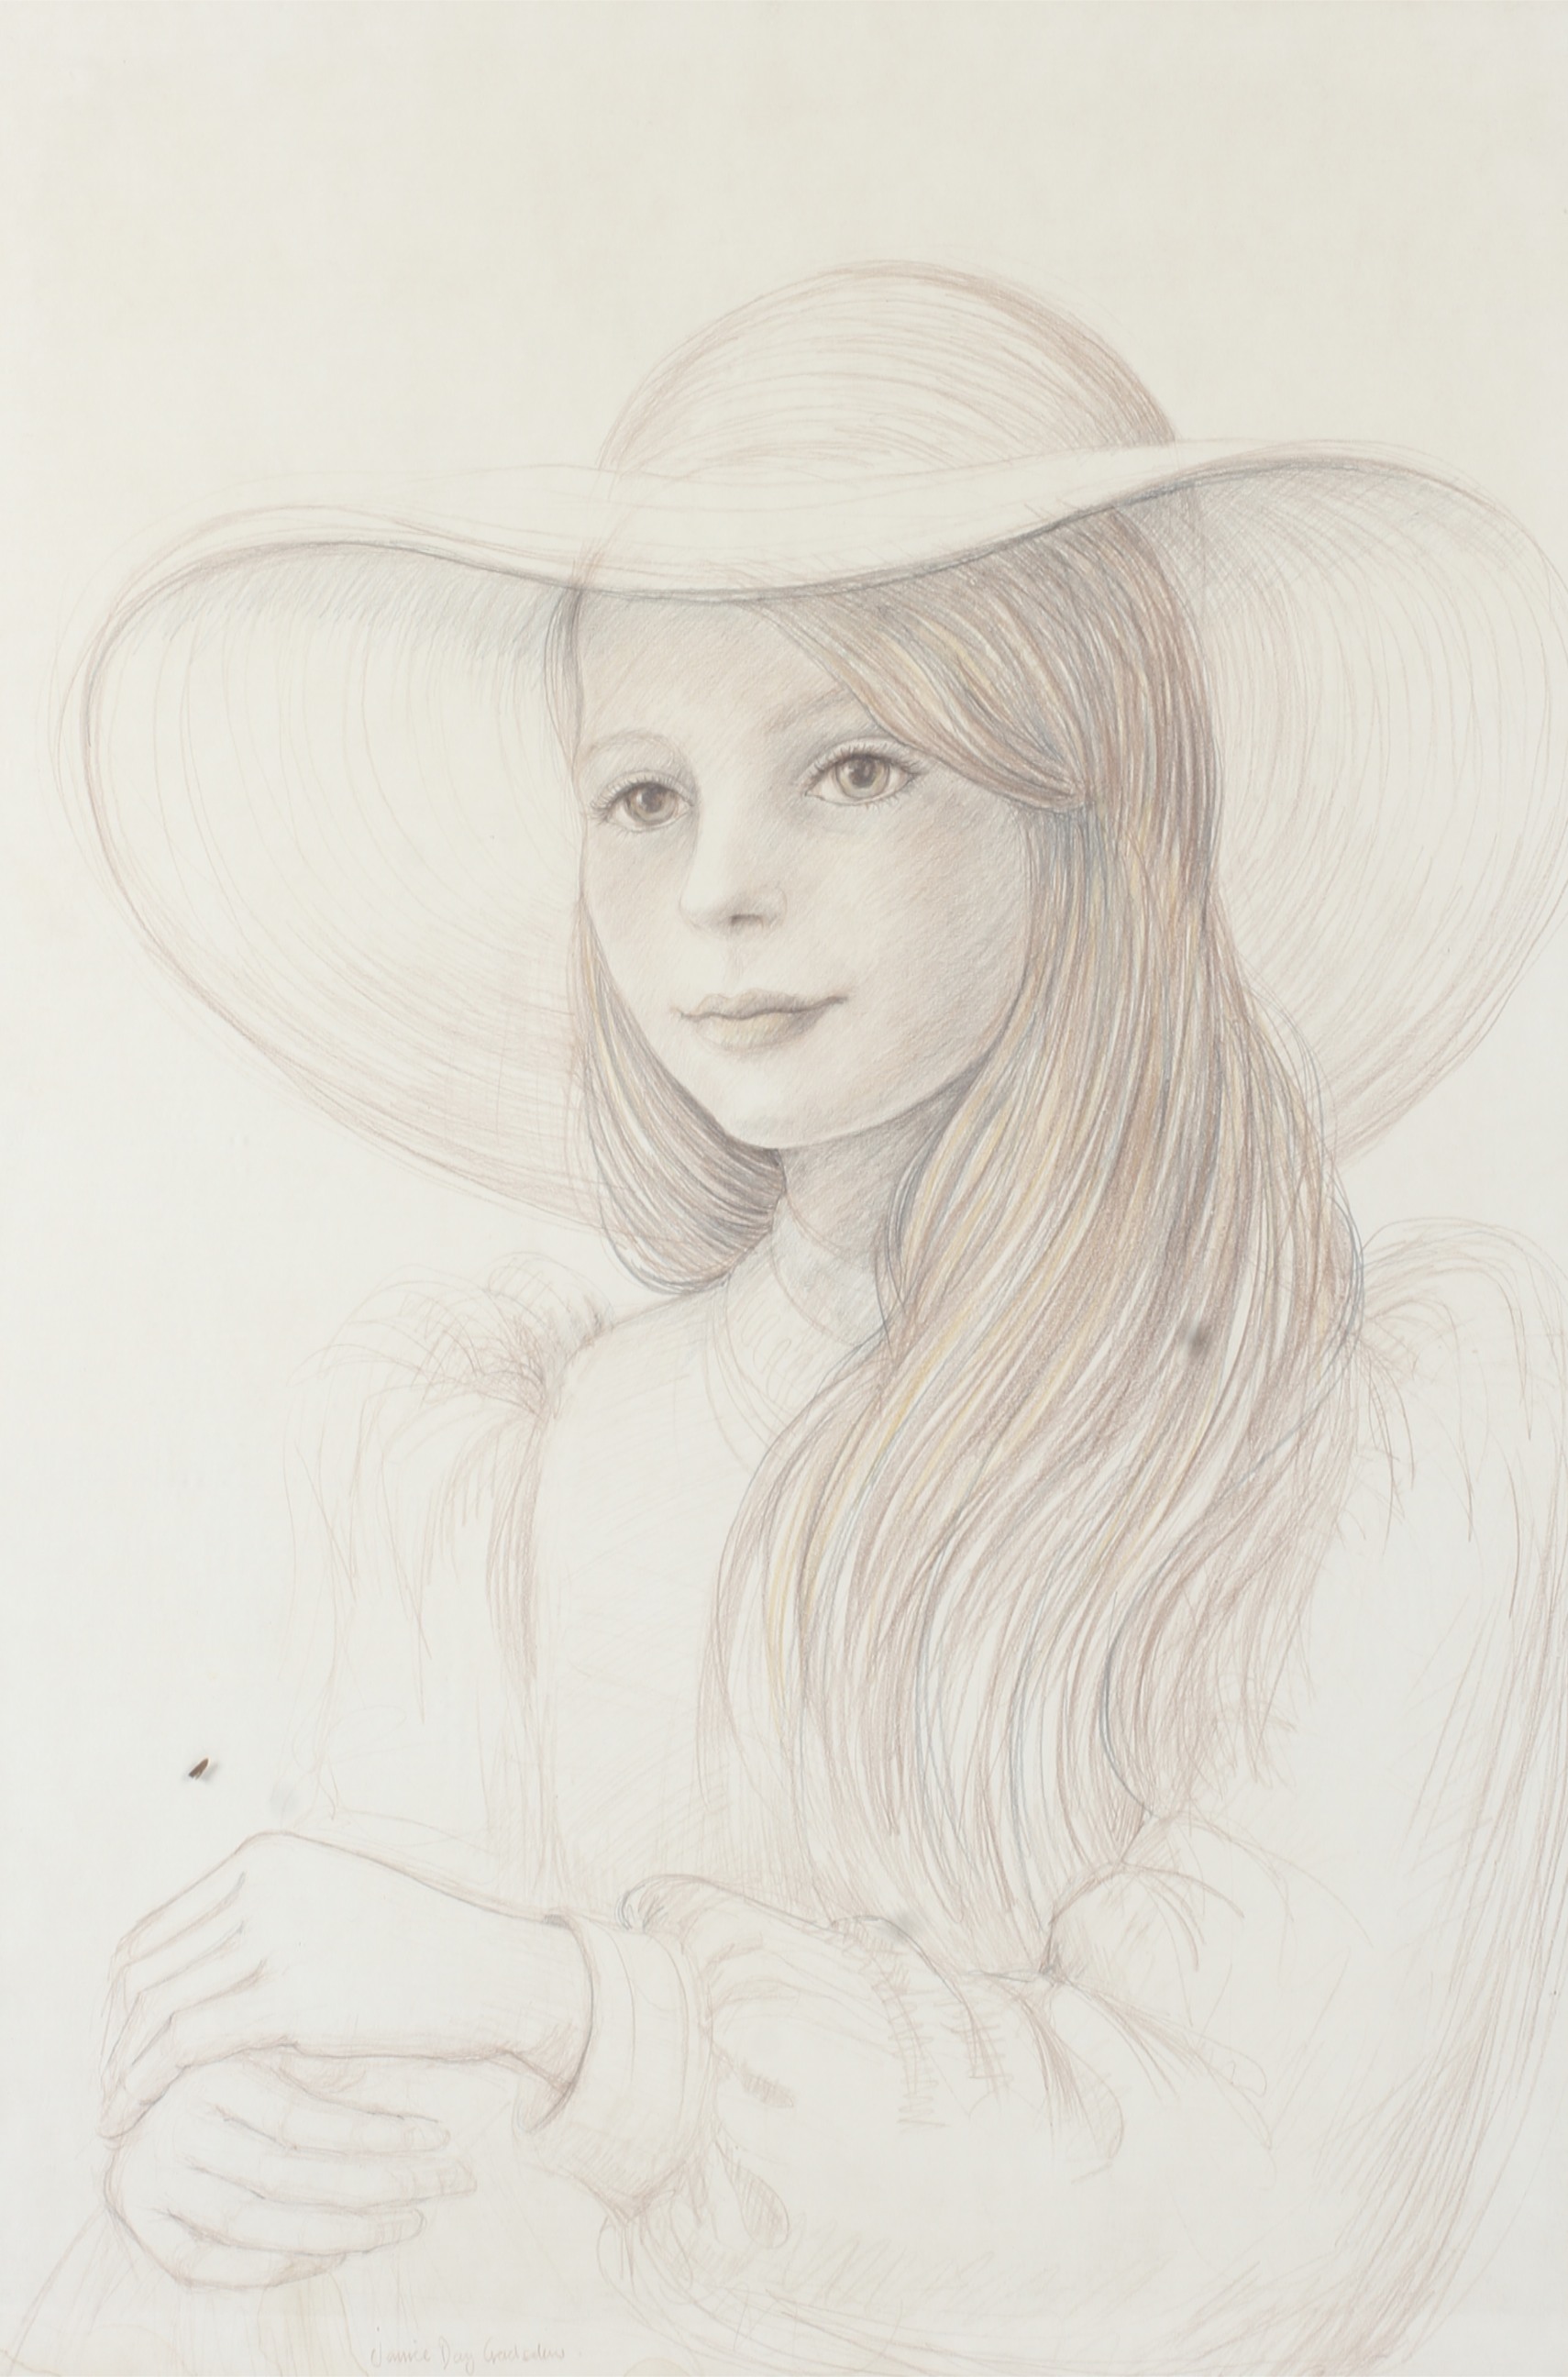 A coloured pencil portrait sketch of a young lady, circa 1970.